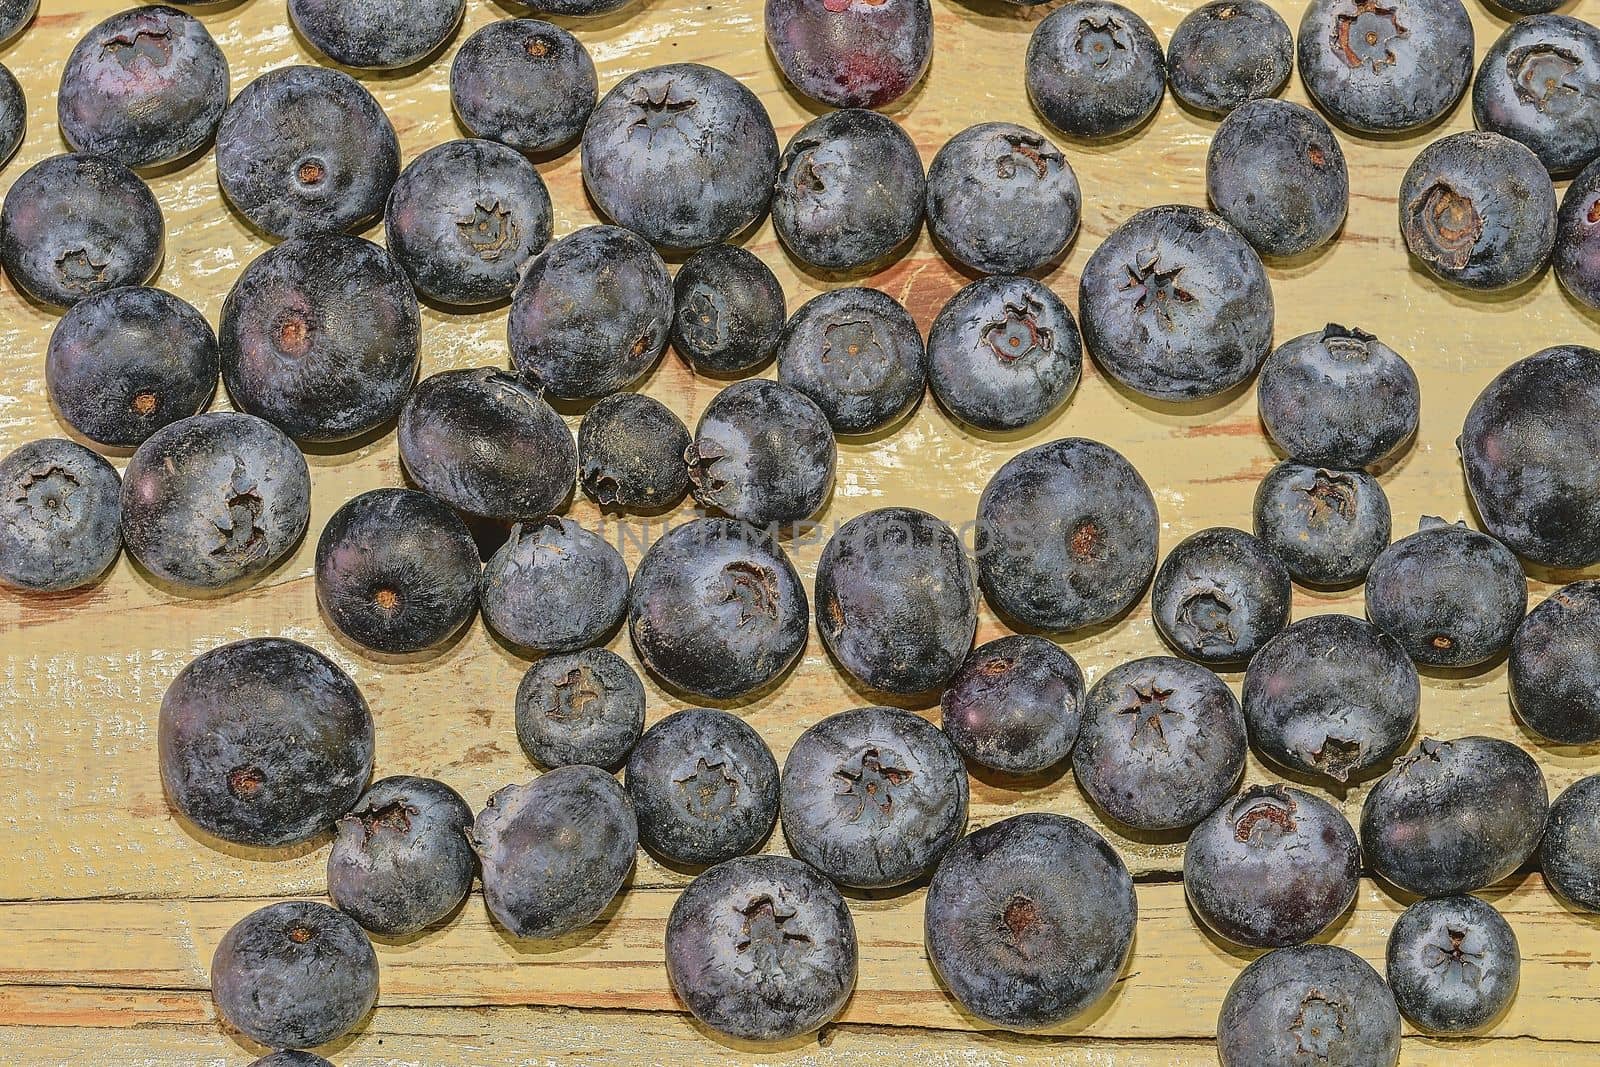 Blueberries  on white wooden background. Bilberries, blueberries, huckleberries, whortleberries Flat design 